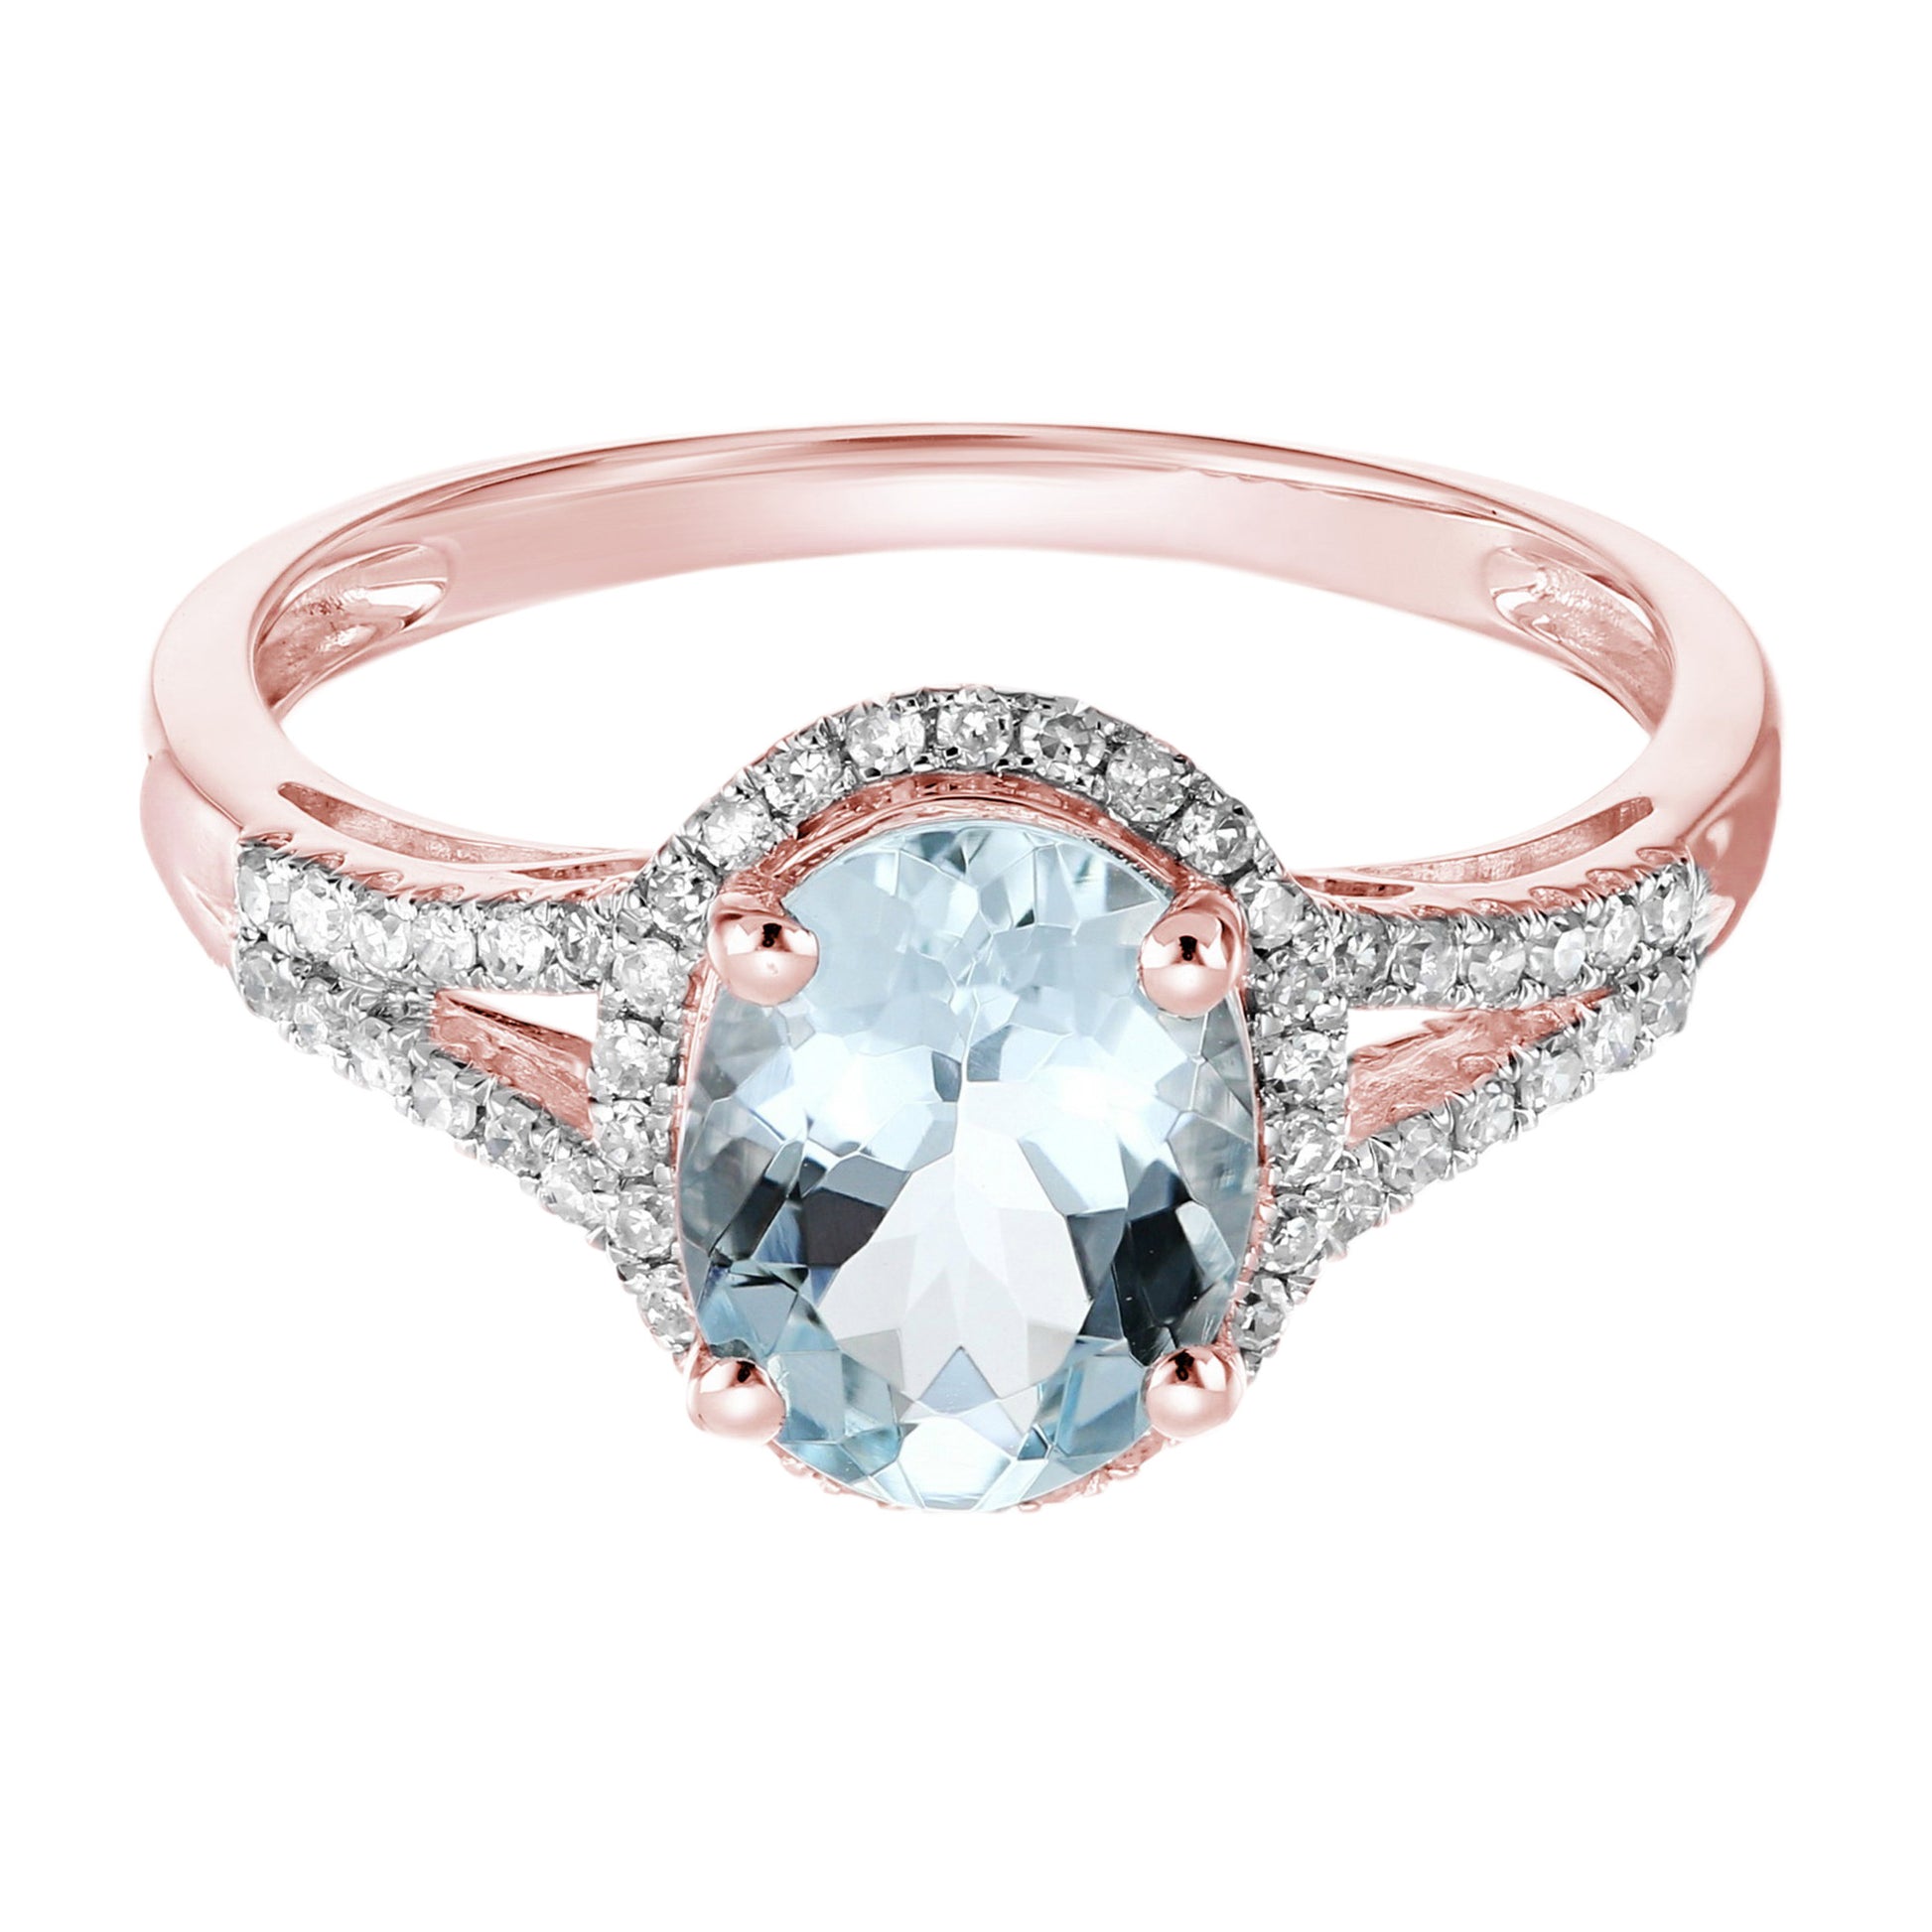 10kt Rose Gold Aquamarine, Diamond Ring - Pinctore